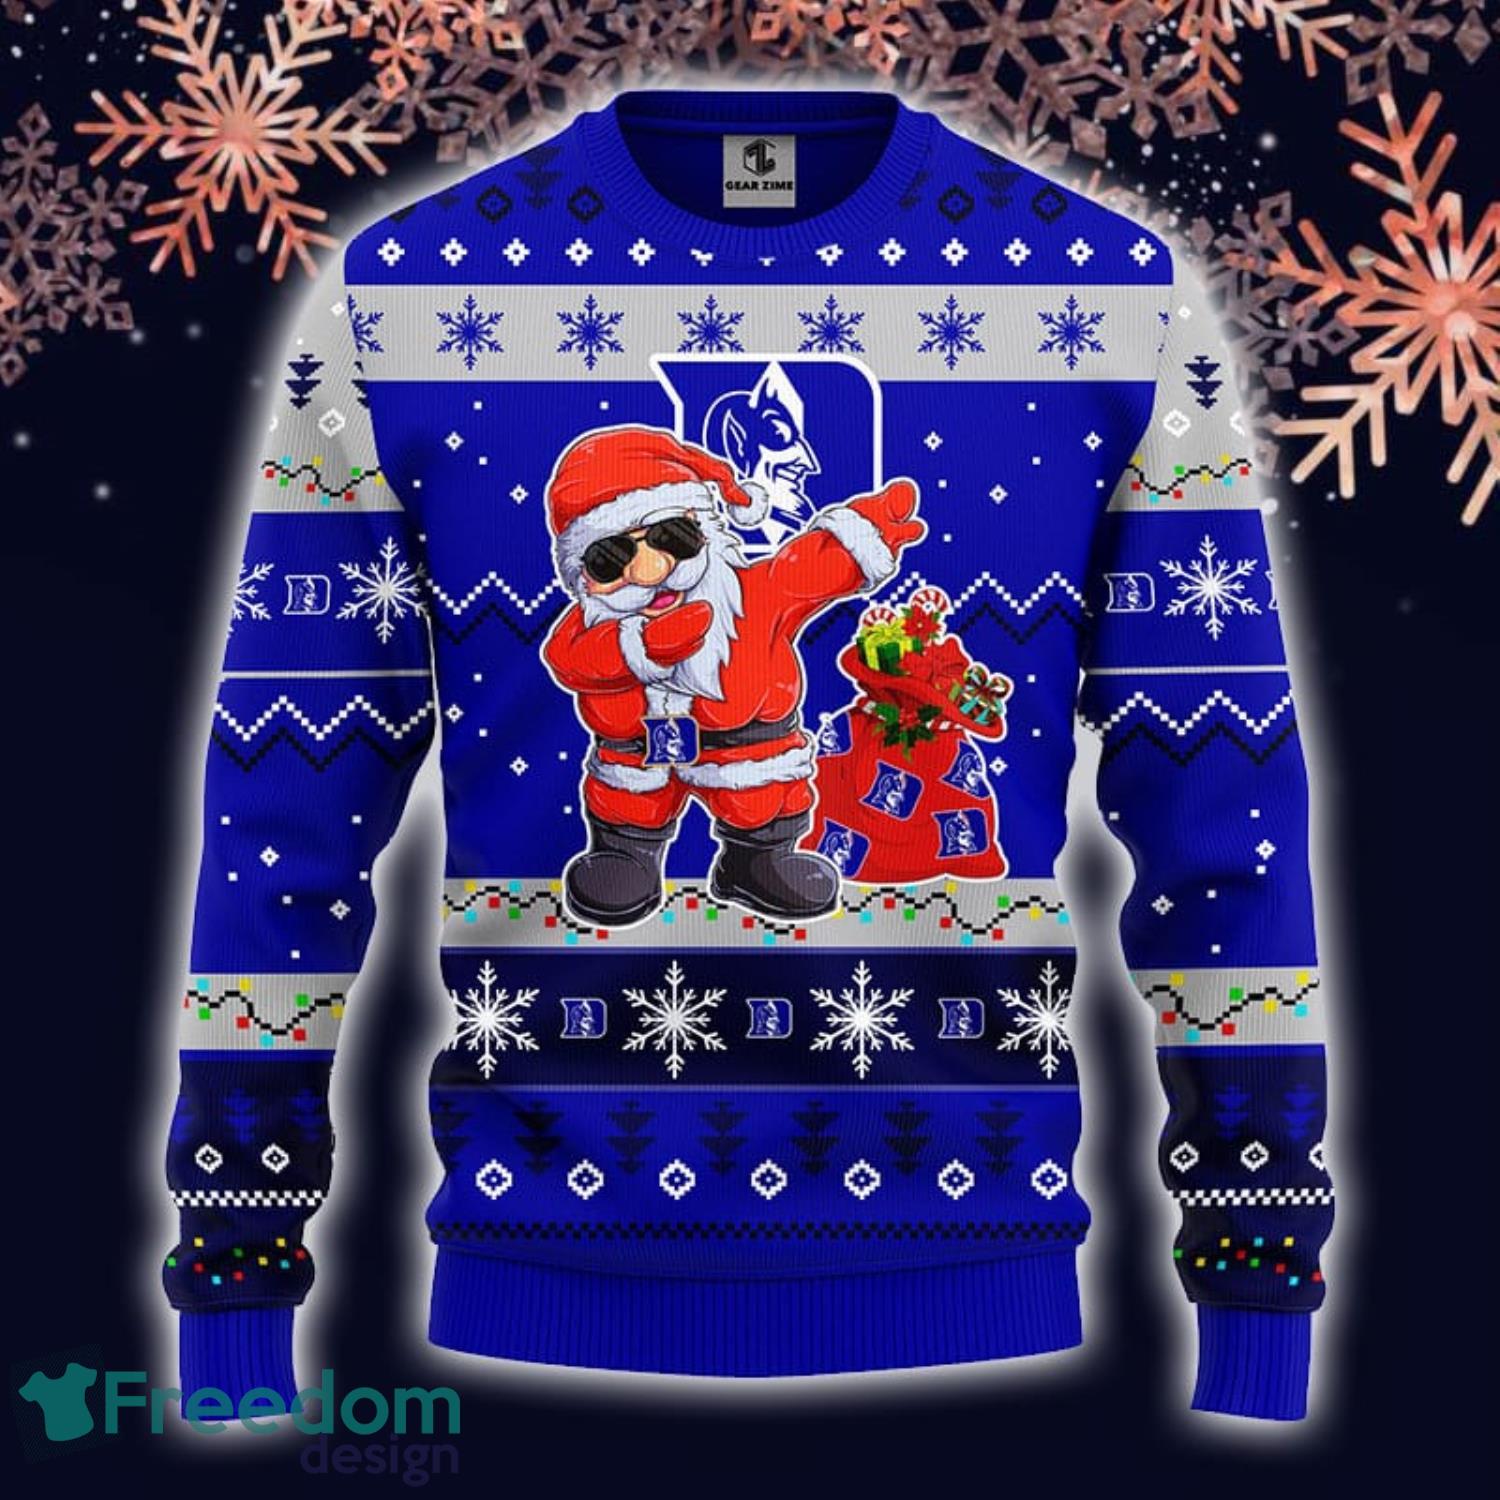 Houston Astros Print Sweater Mlb Baseball Fans Ugly Christmas Sweater -  Freedomdesign